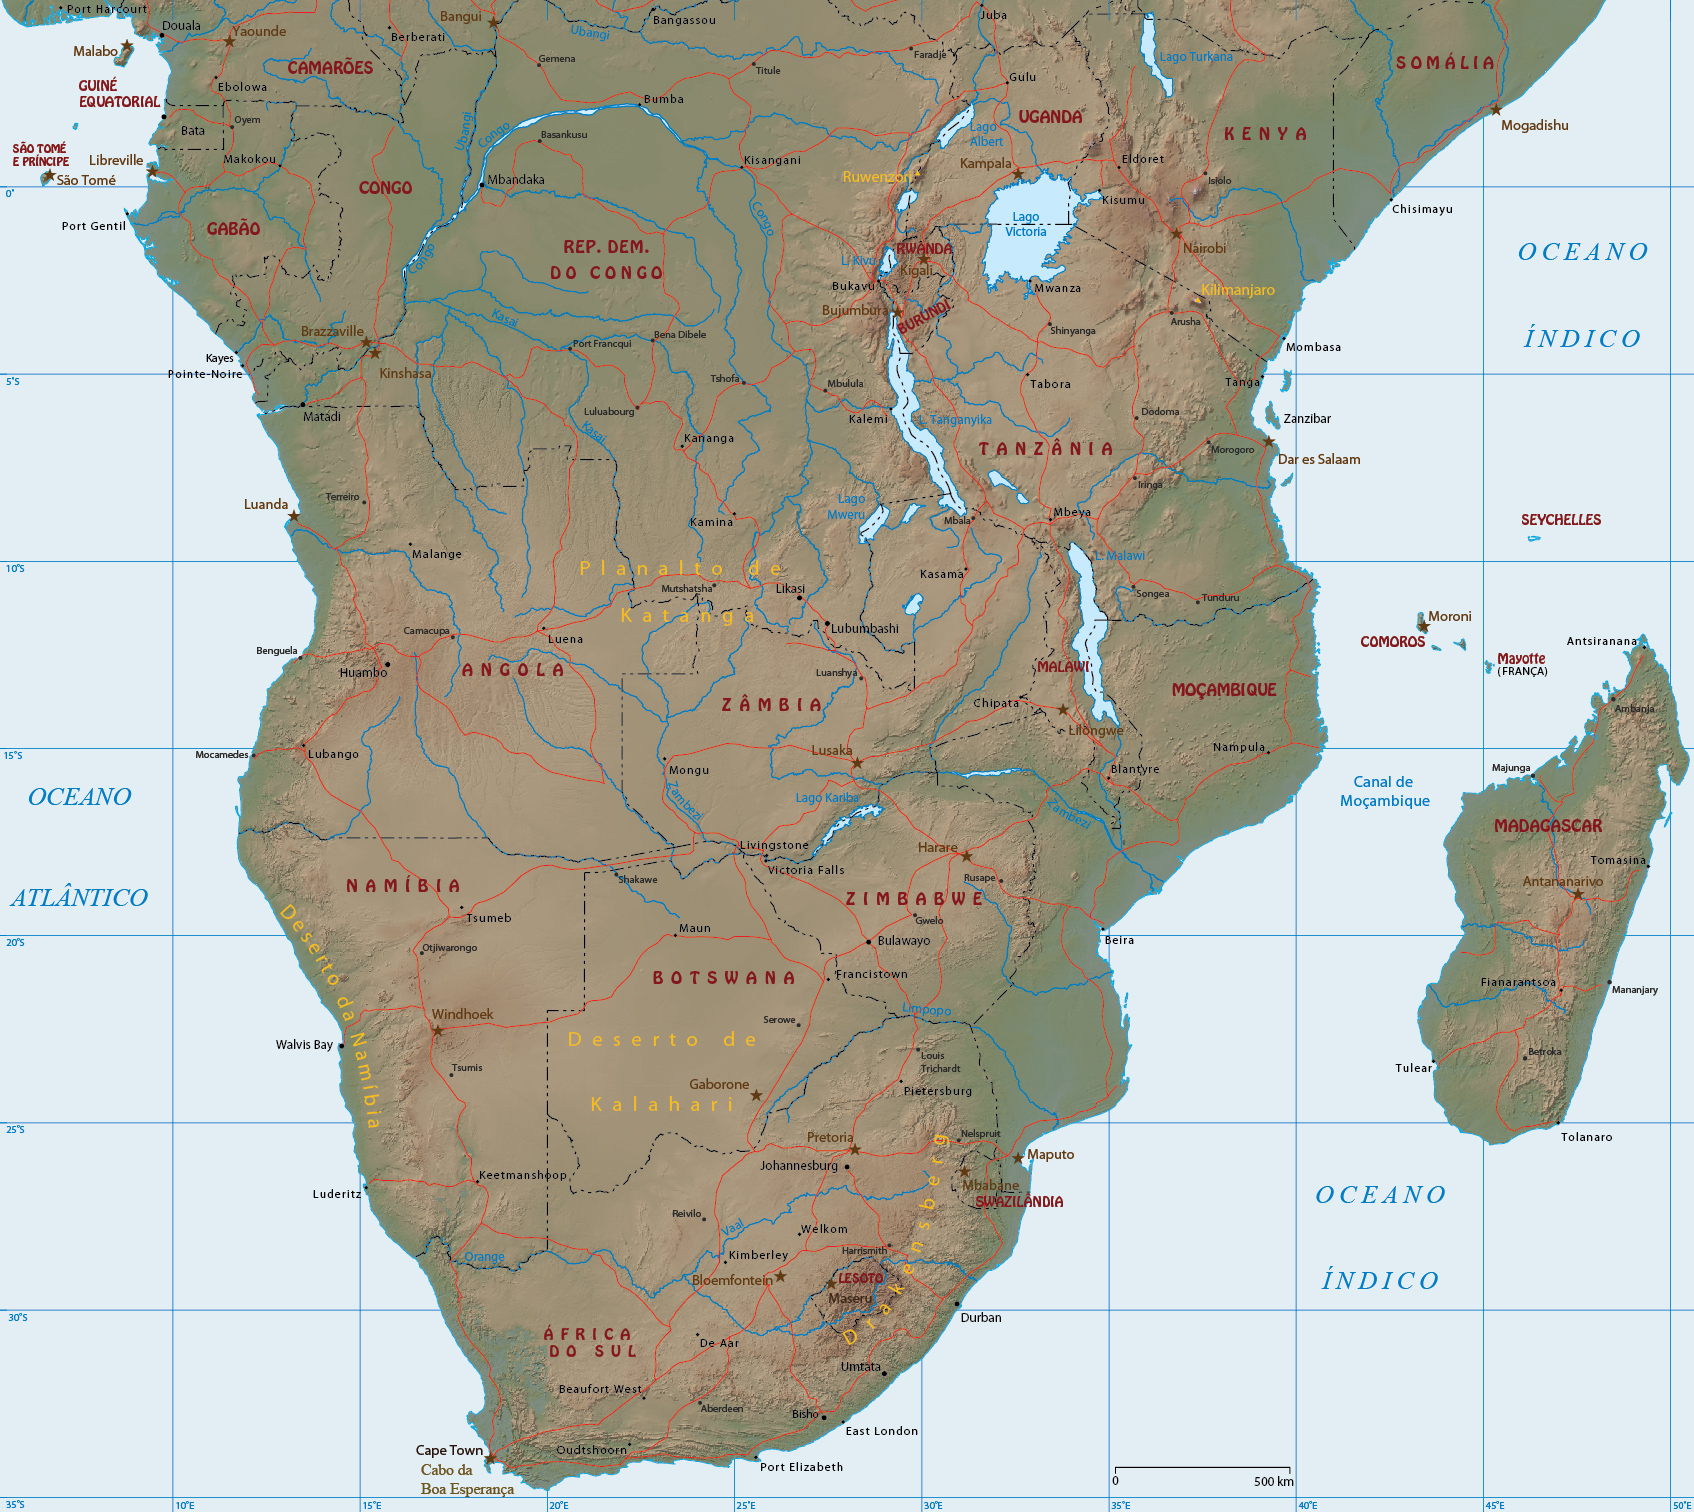 Africa mapa fisico